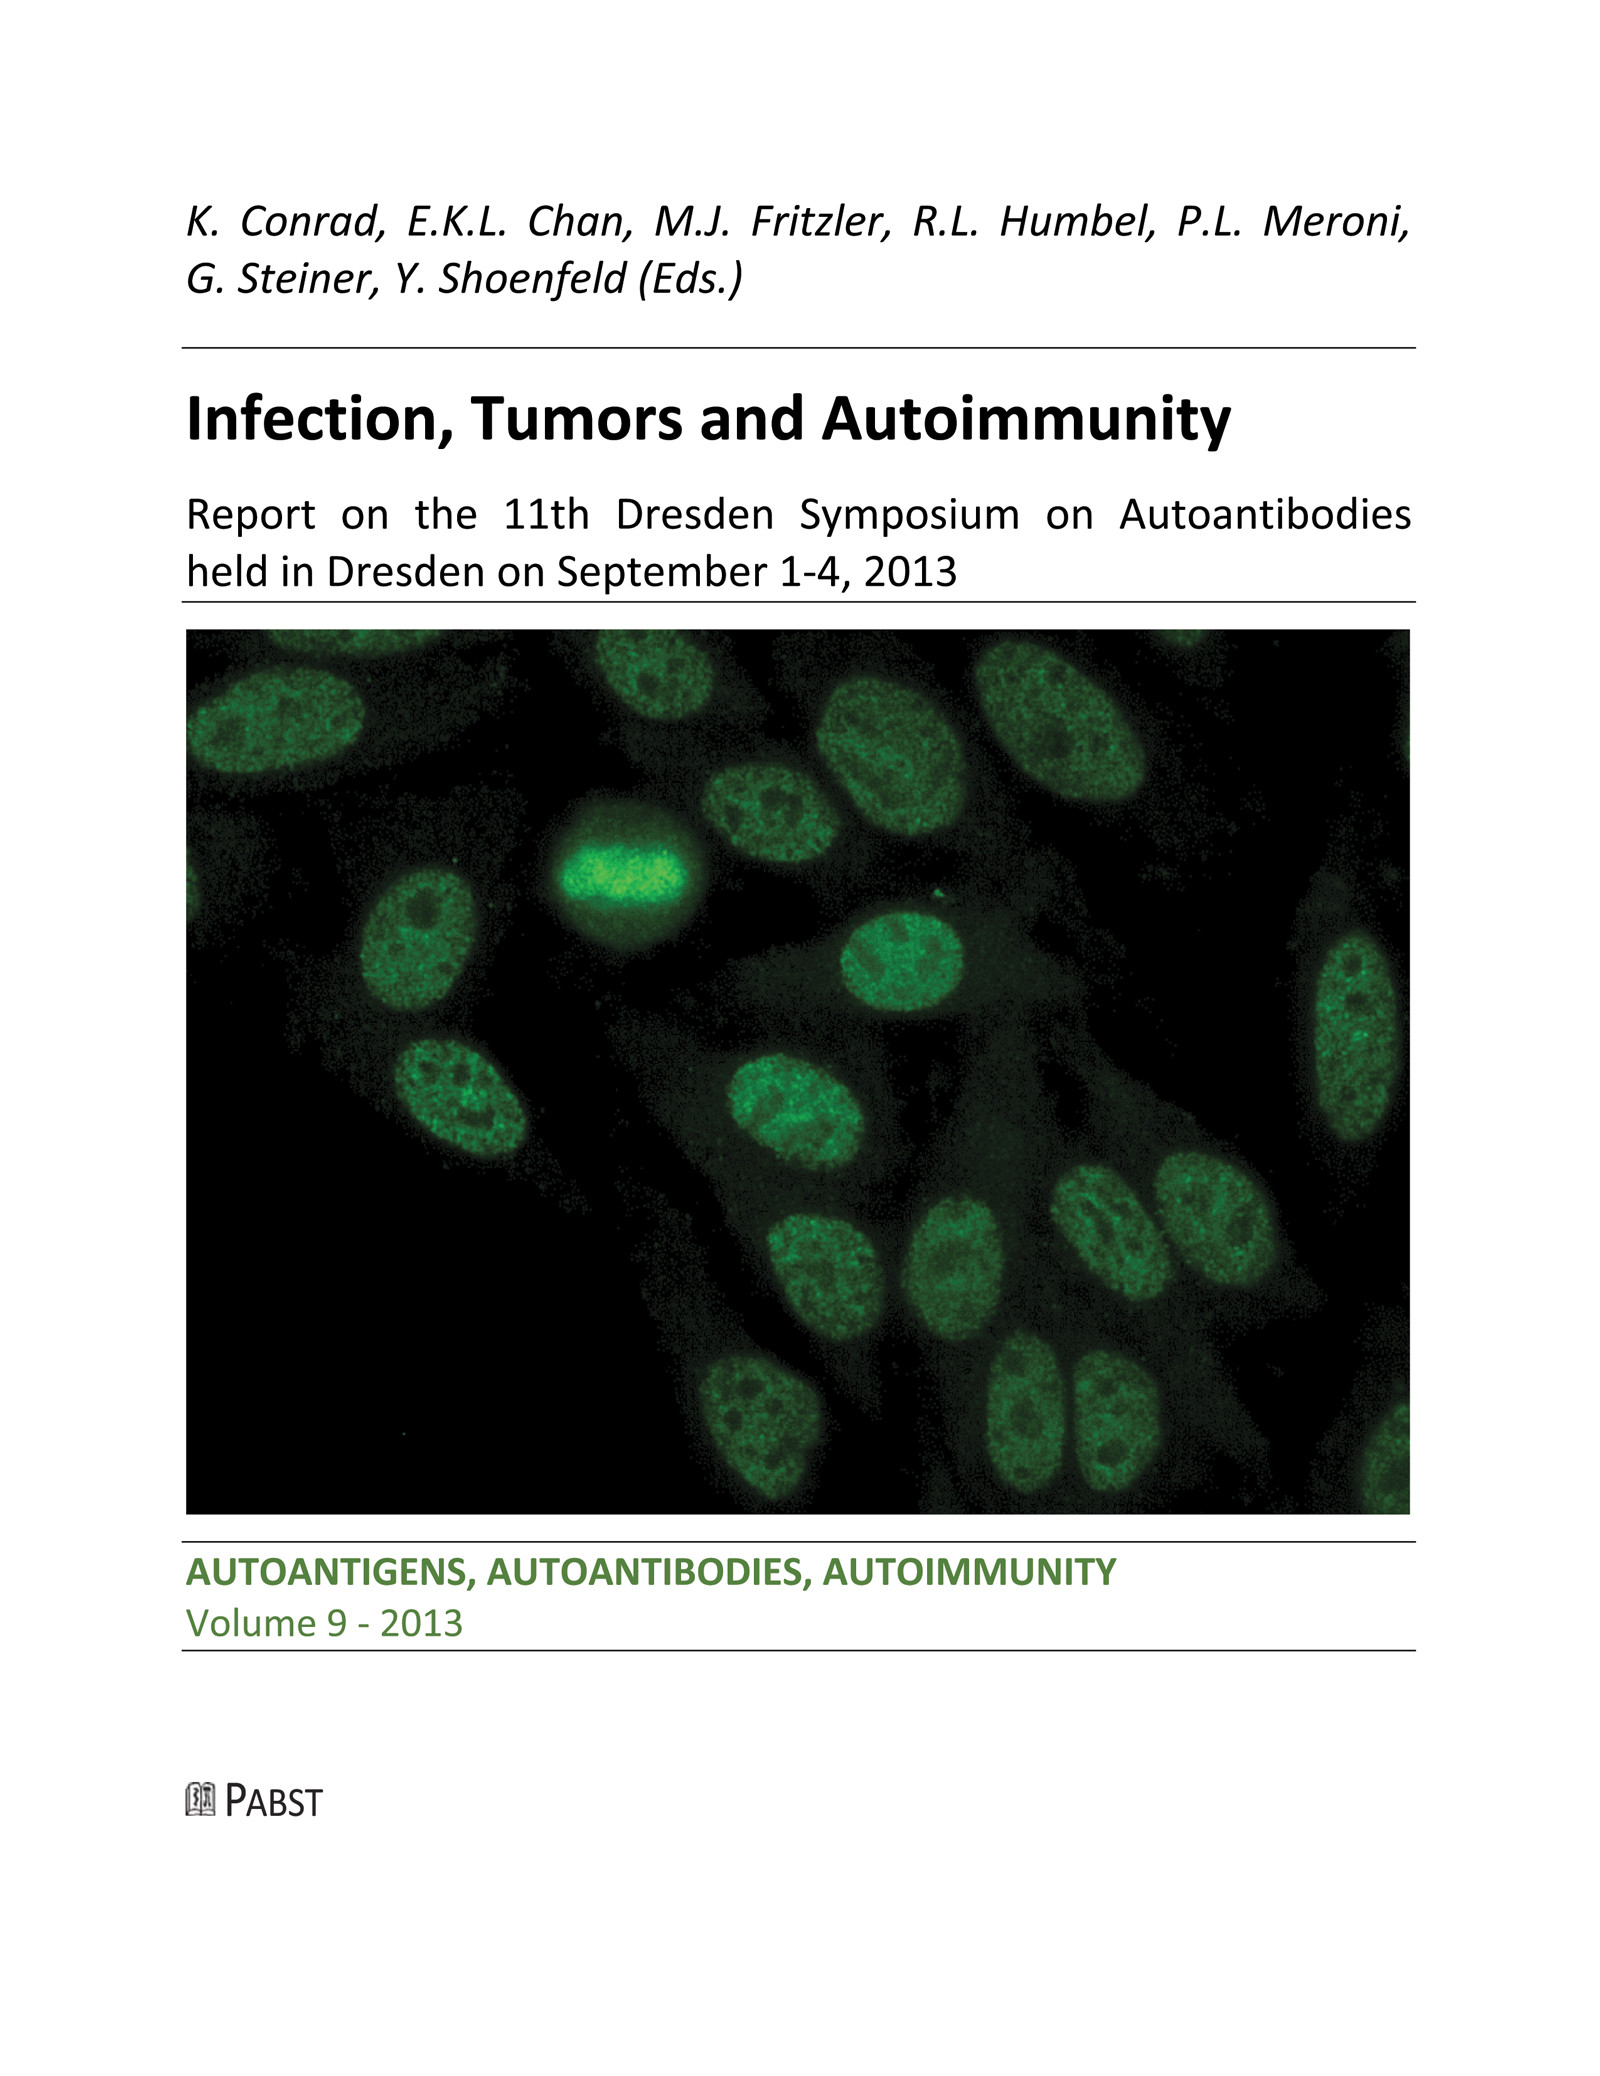 Infection, Tumors and Autoimmunity